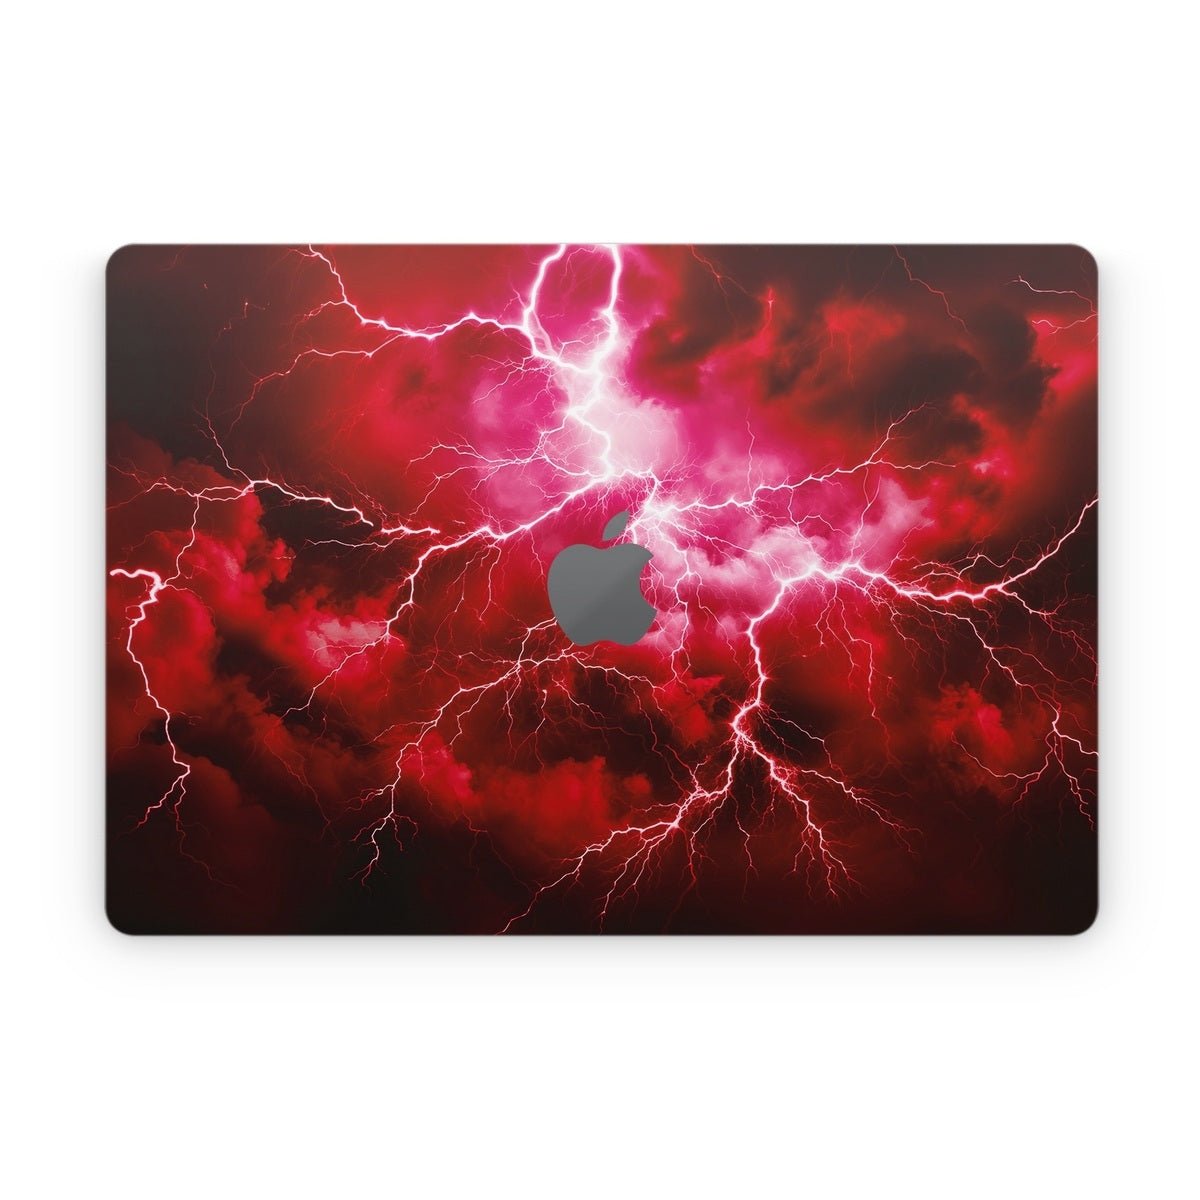 Apocalypse Red - Apple MacBook Skin - Gaming - DecalGirl